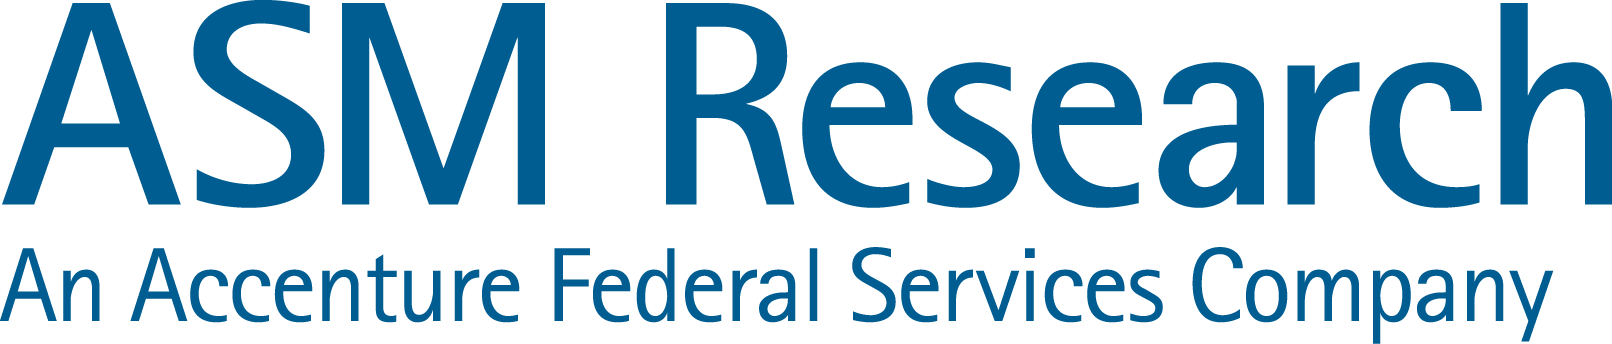 ASM Research Company Logo